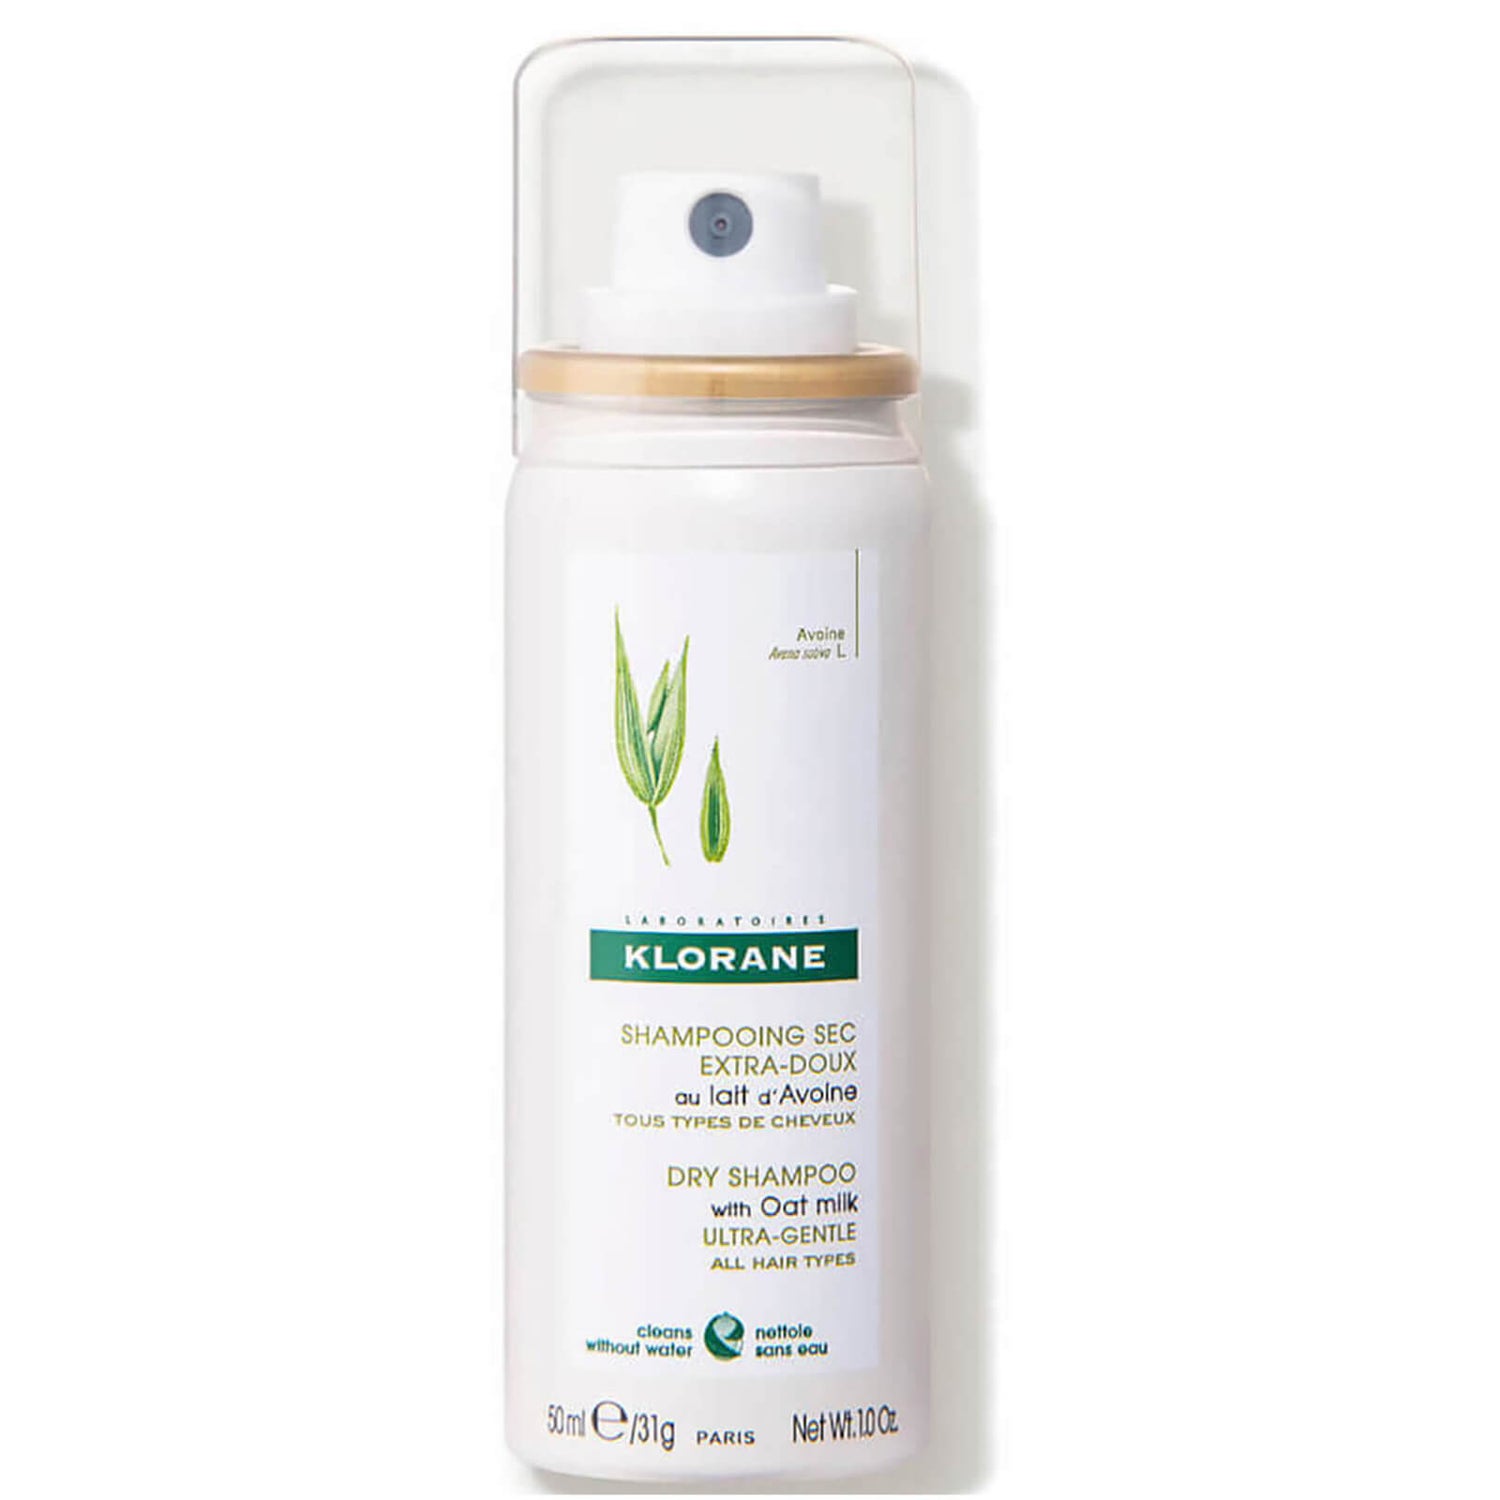 Klorane Dry Shampoo with Oat Milk - All Hair Types 1 oz.